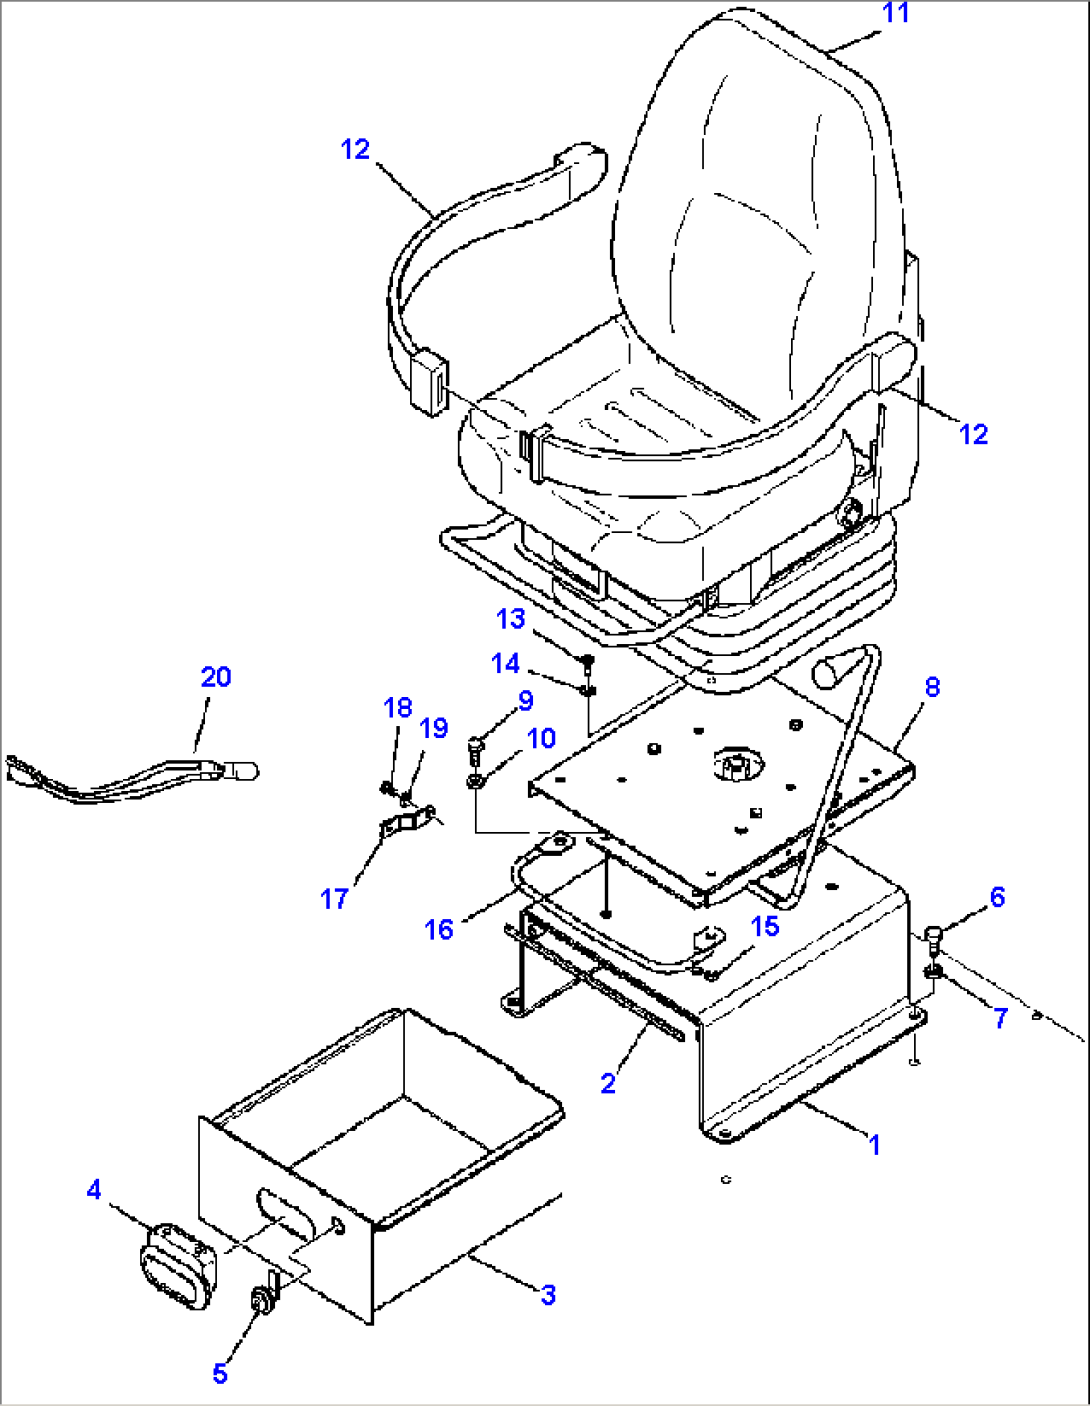 K5201-01A0 CANOPY OPERATORS SEAT MOUNTING